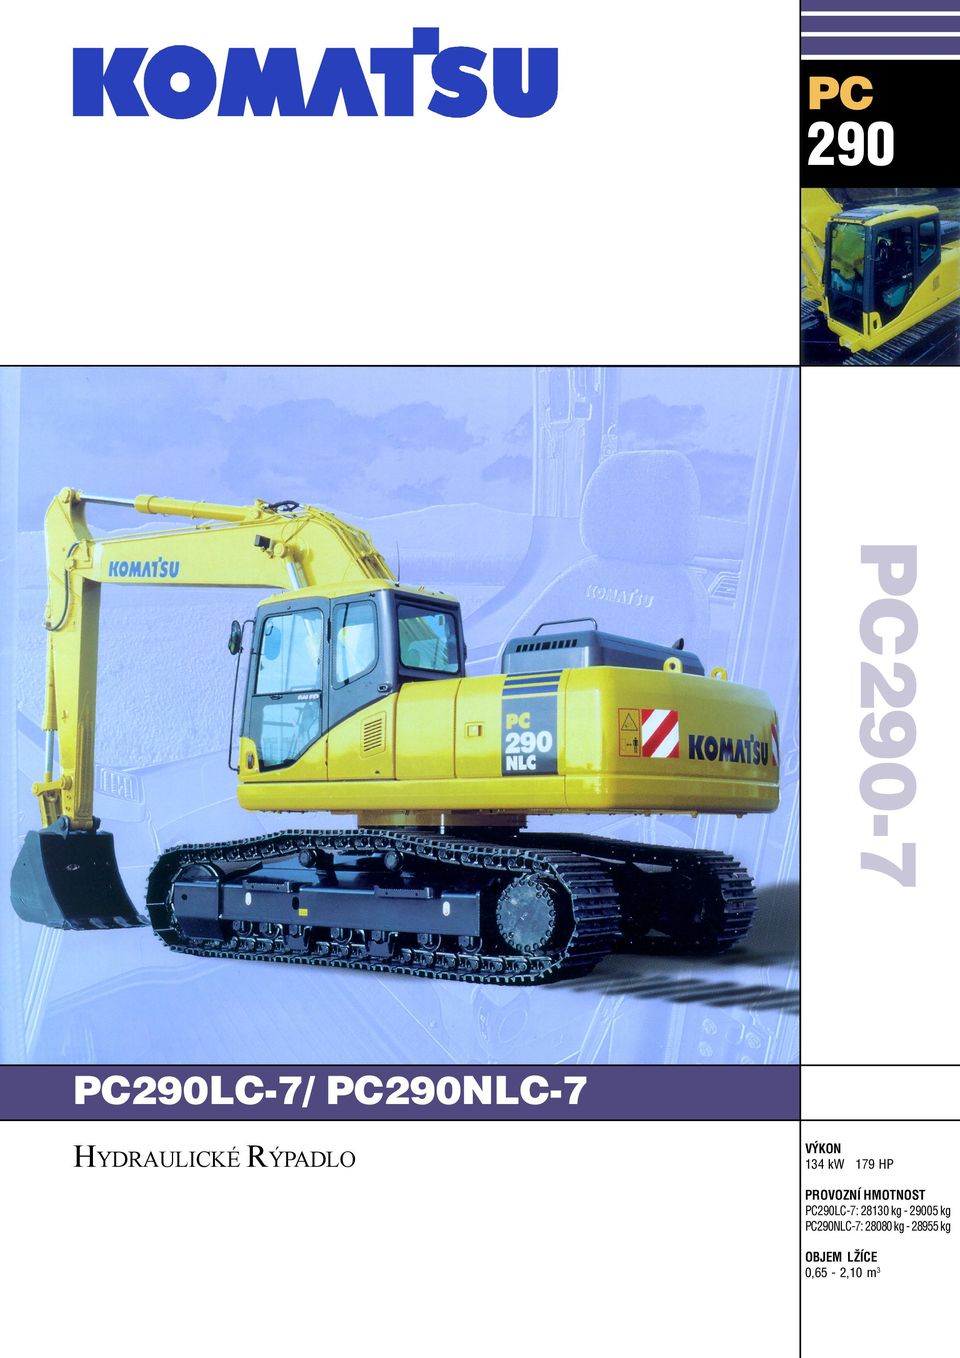 PC290LC-7: 28130 kg - 29005 kg